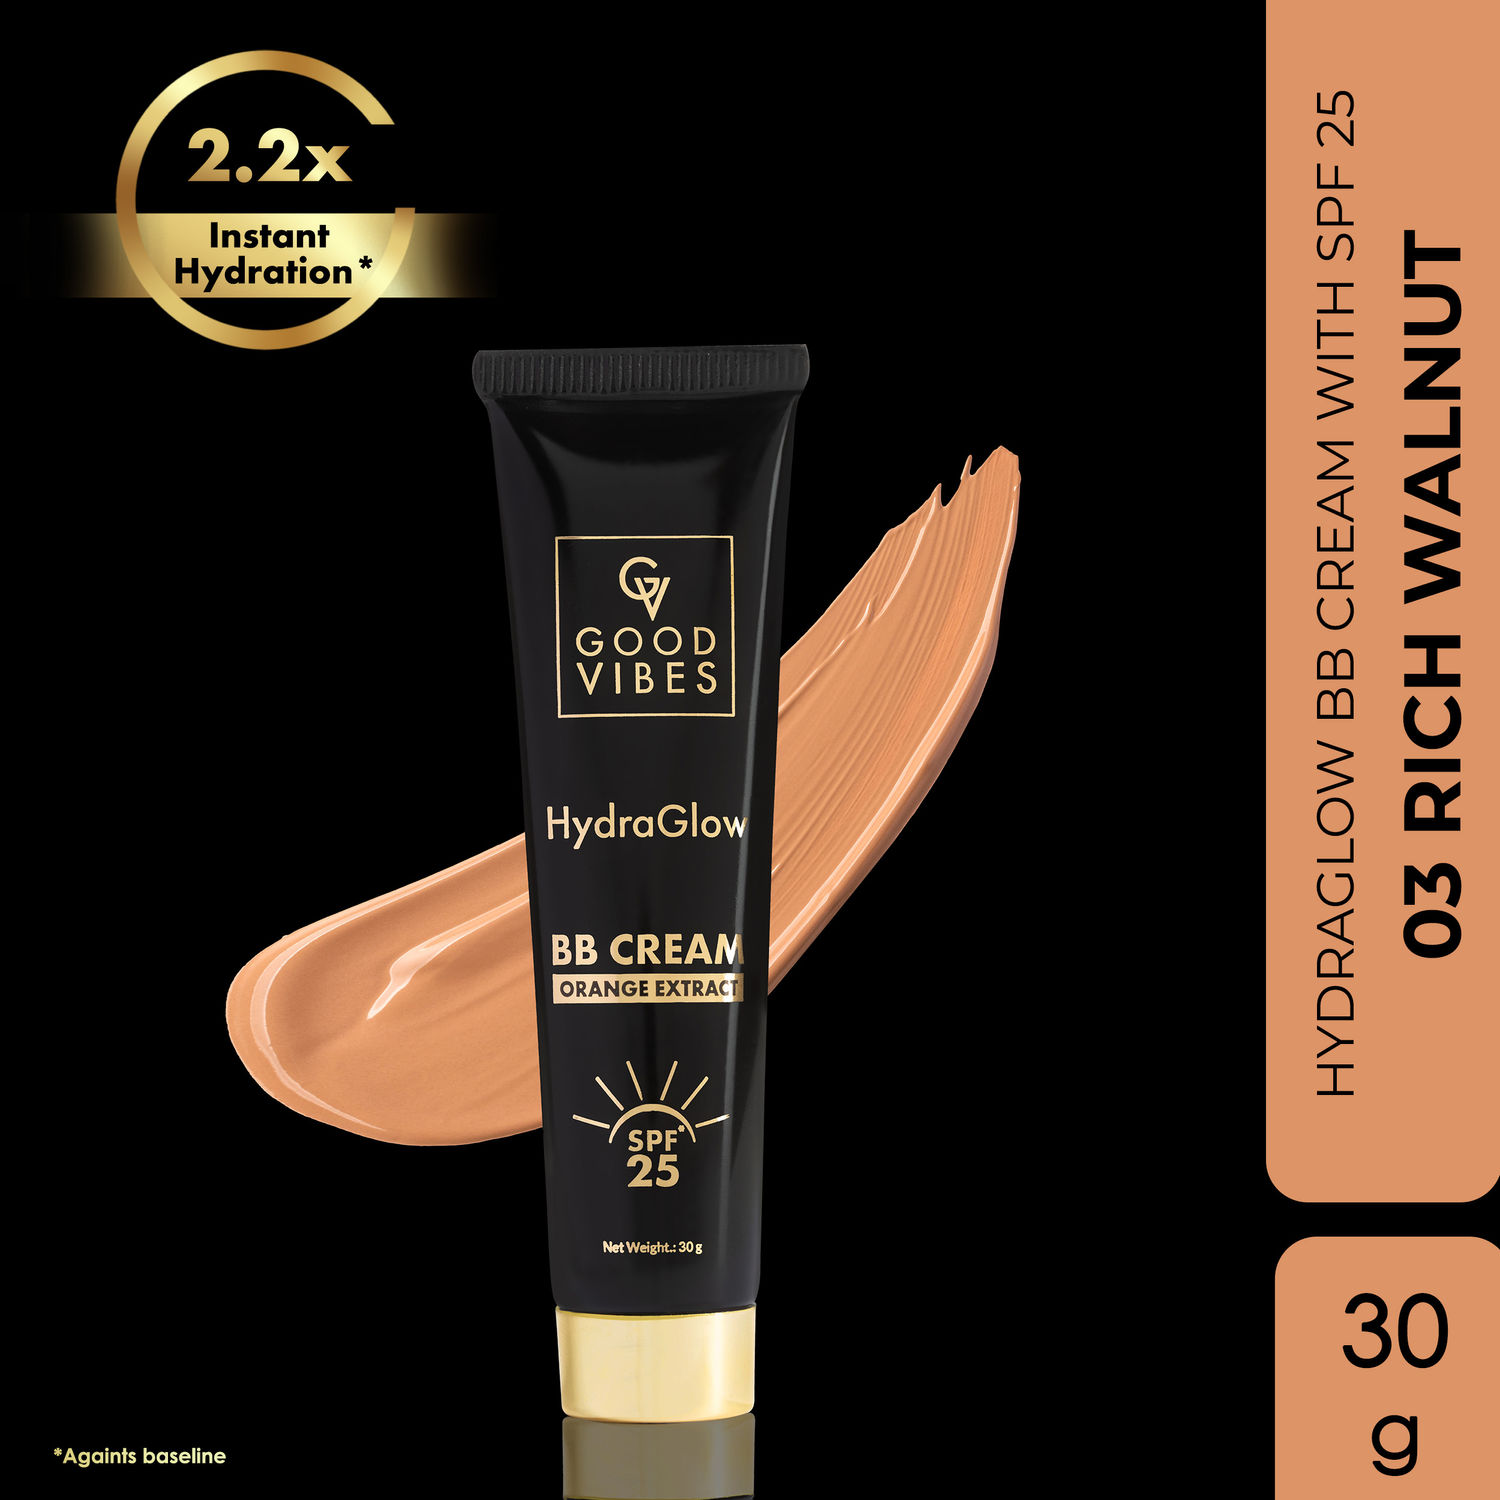 Good Vibes HydraGlow BB Cream | SPF 25 with Orange Extract